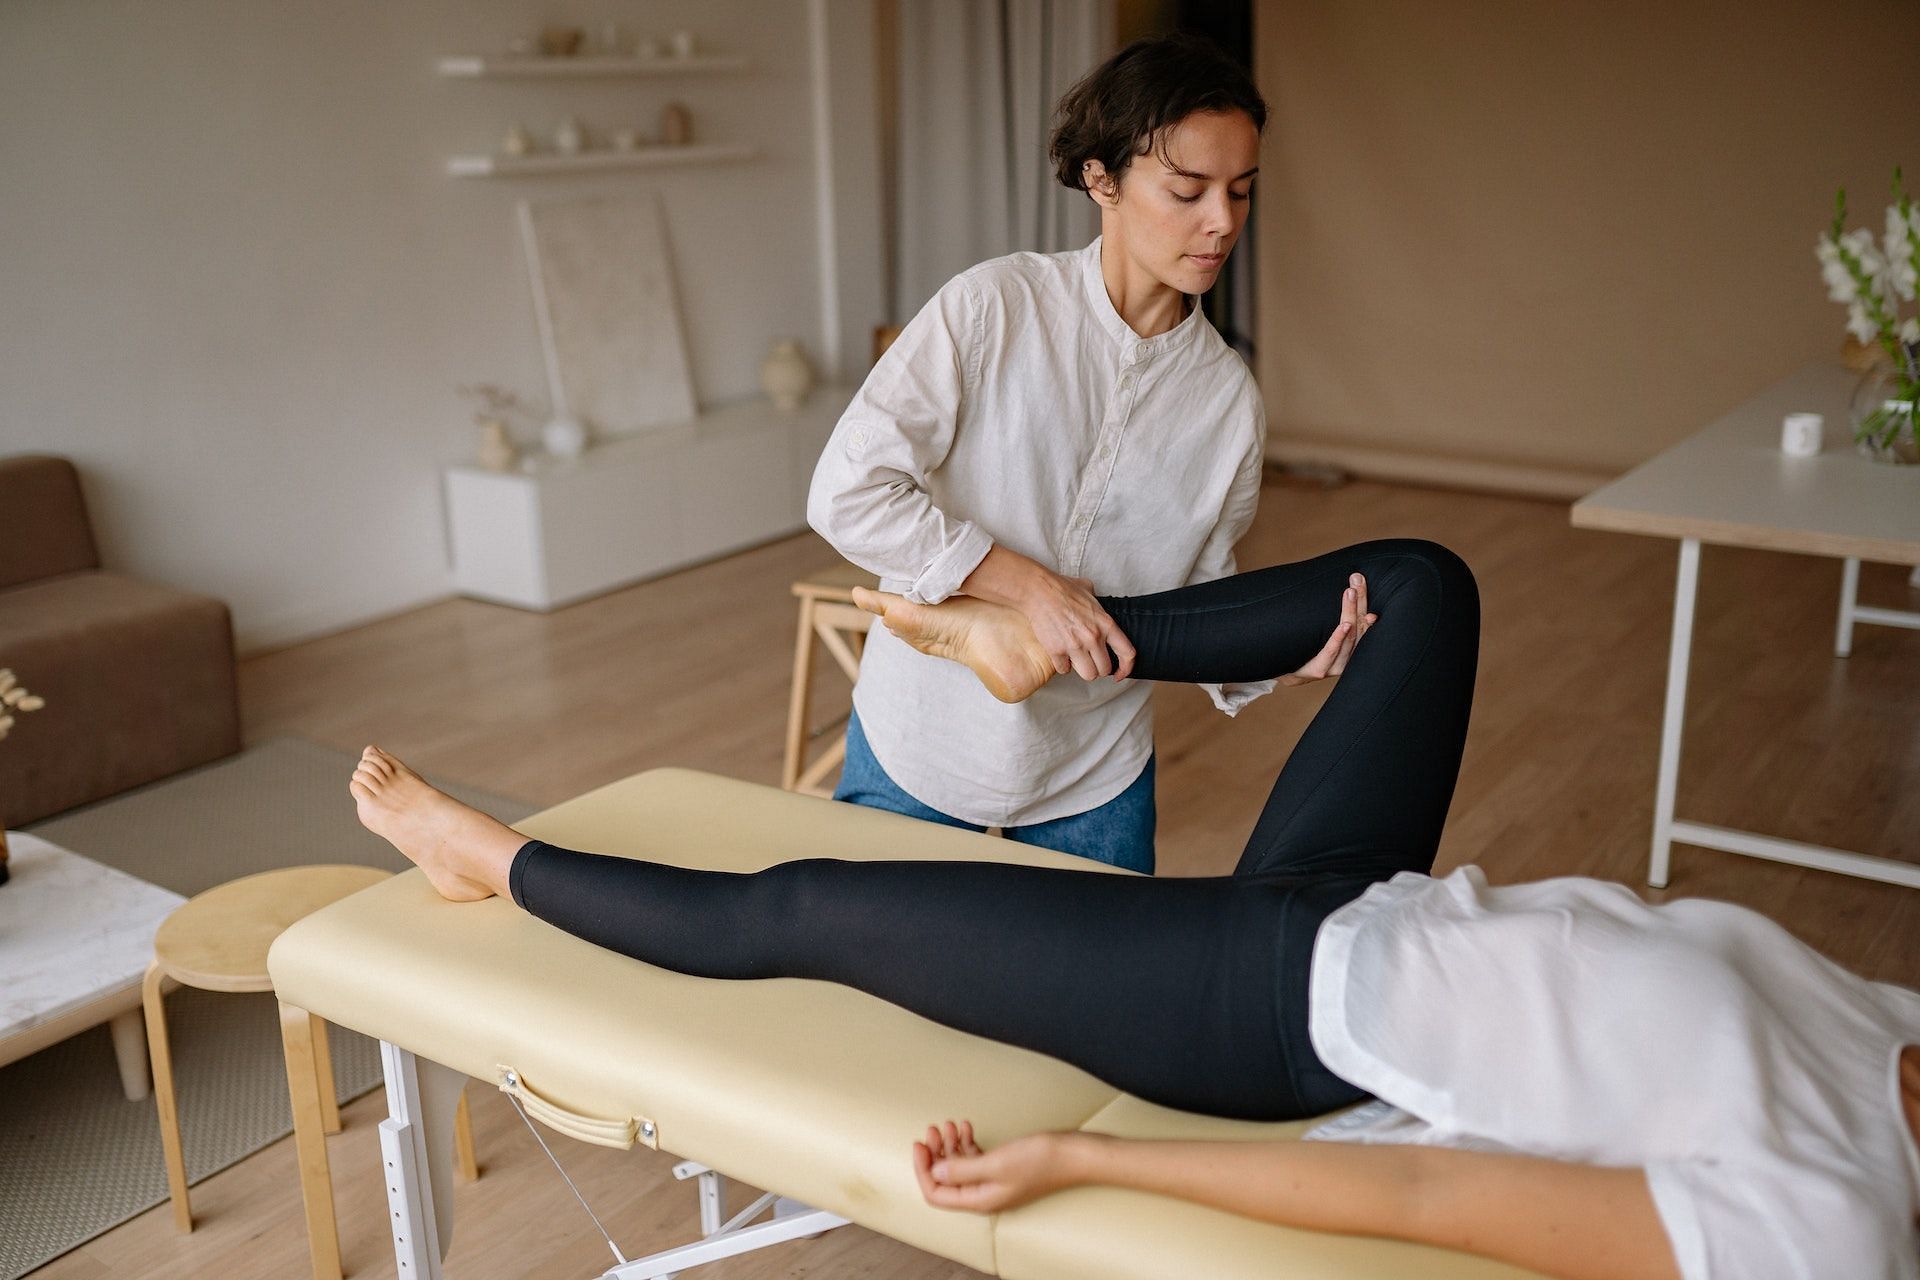 Getting a leg massage can help. (Photo via Pexels/Yan Krukau)